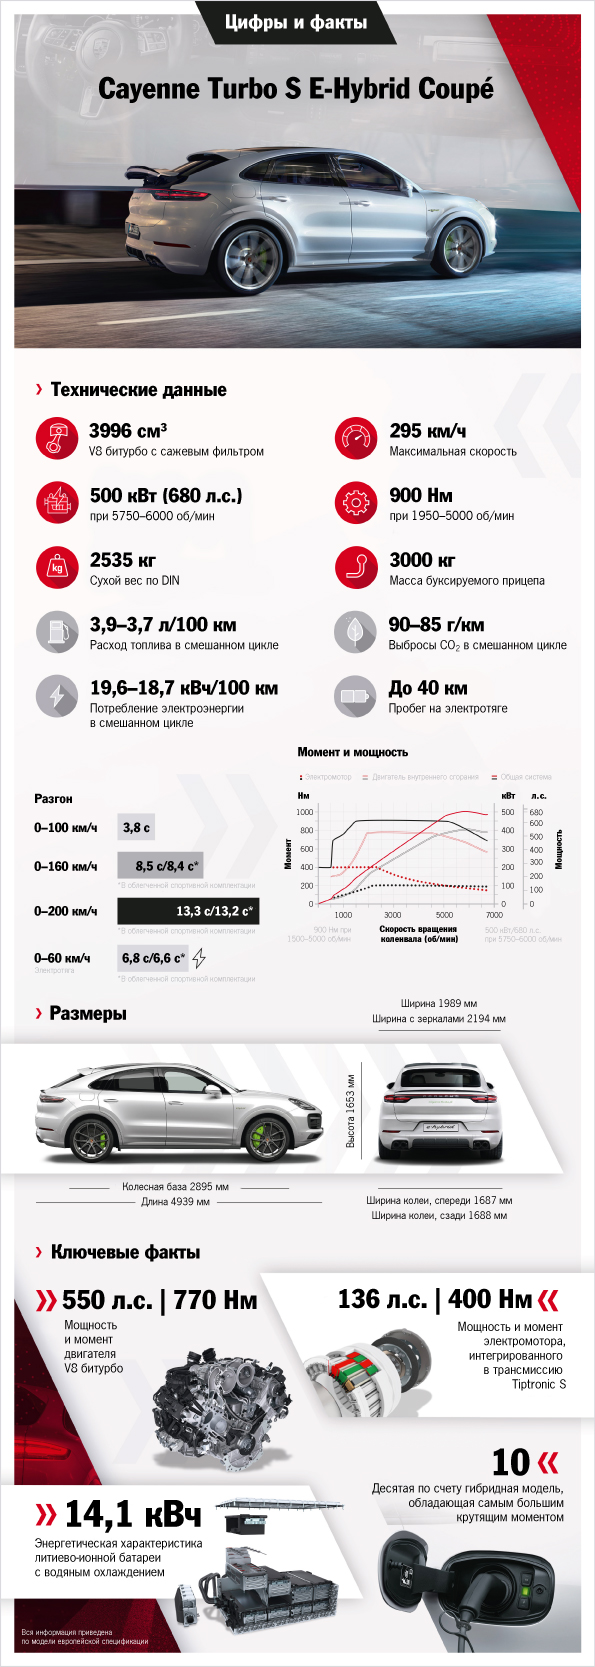 Cayenne Turbo S E-Hybrid Coupé, Инфографика, 2019, Porsche AG